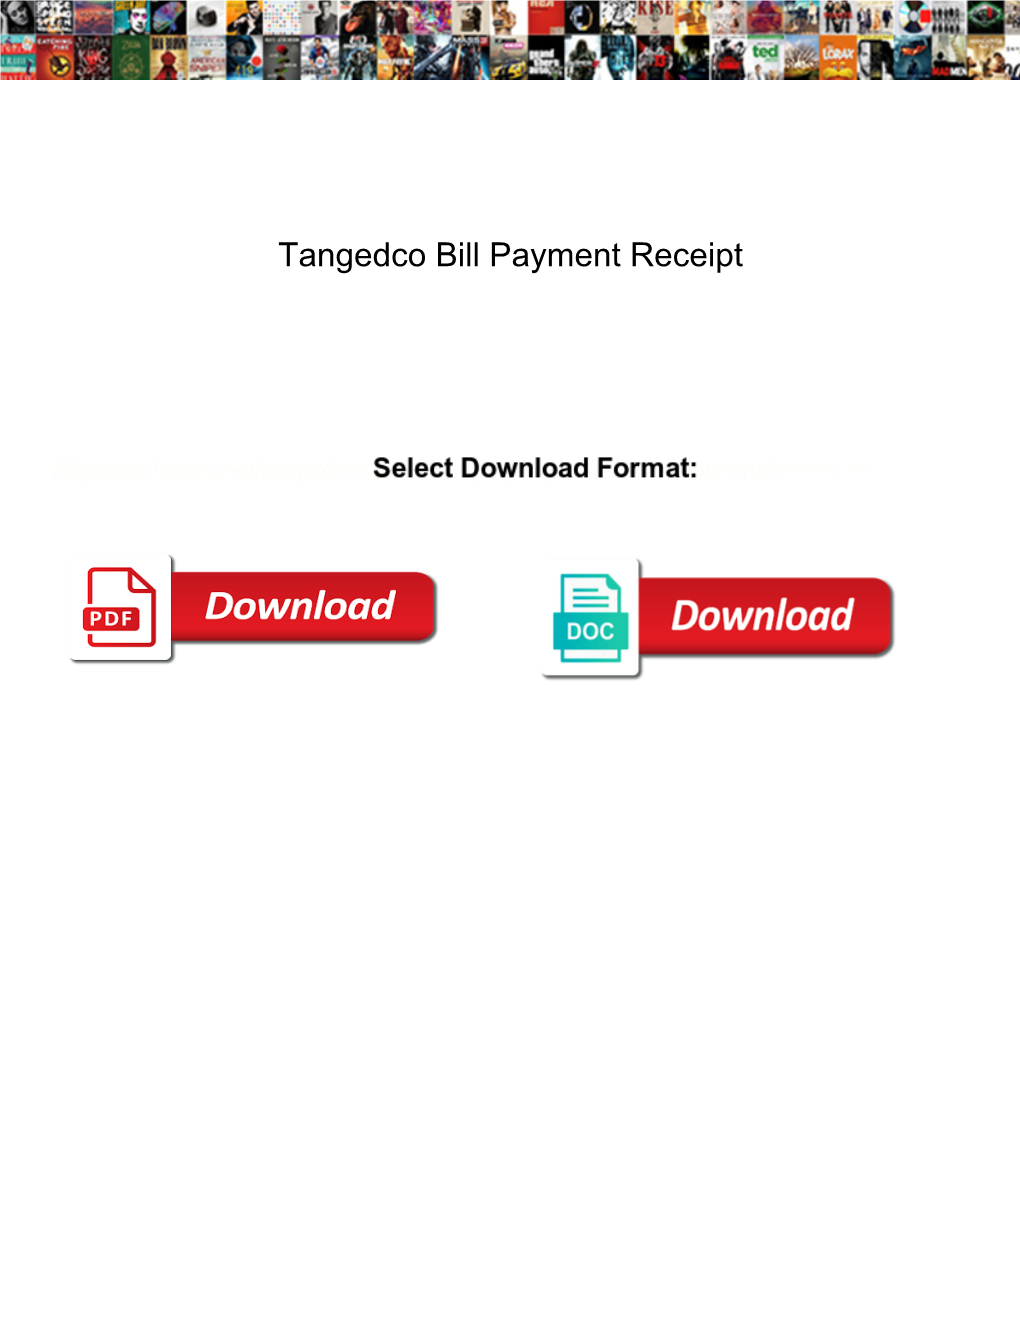 Tangedco-Bill-Payment-Receipt.Pdf